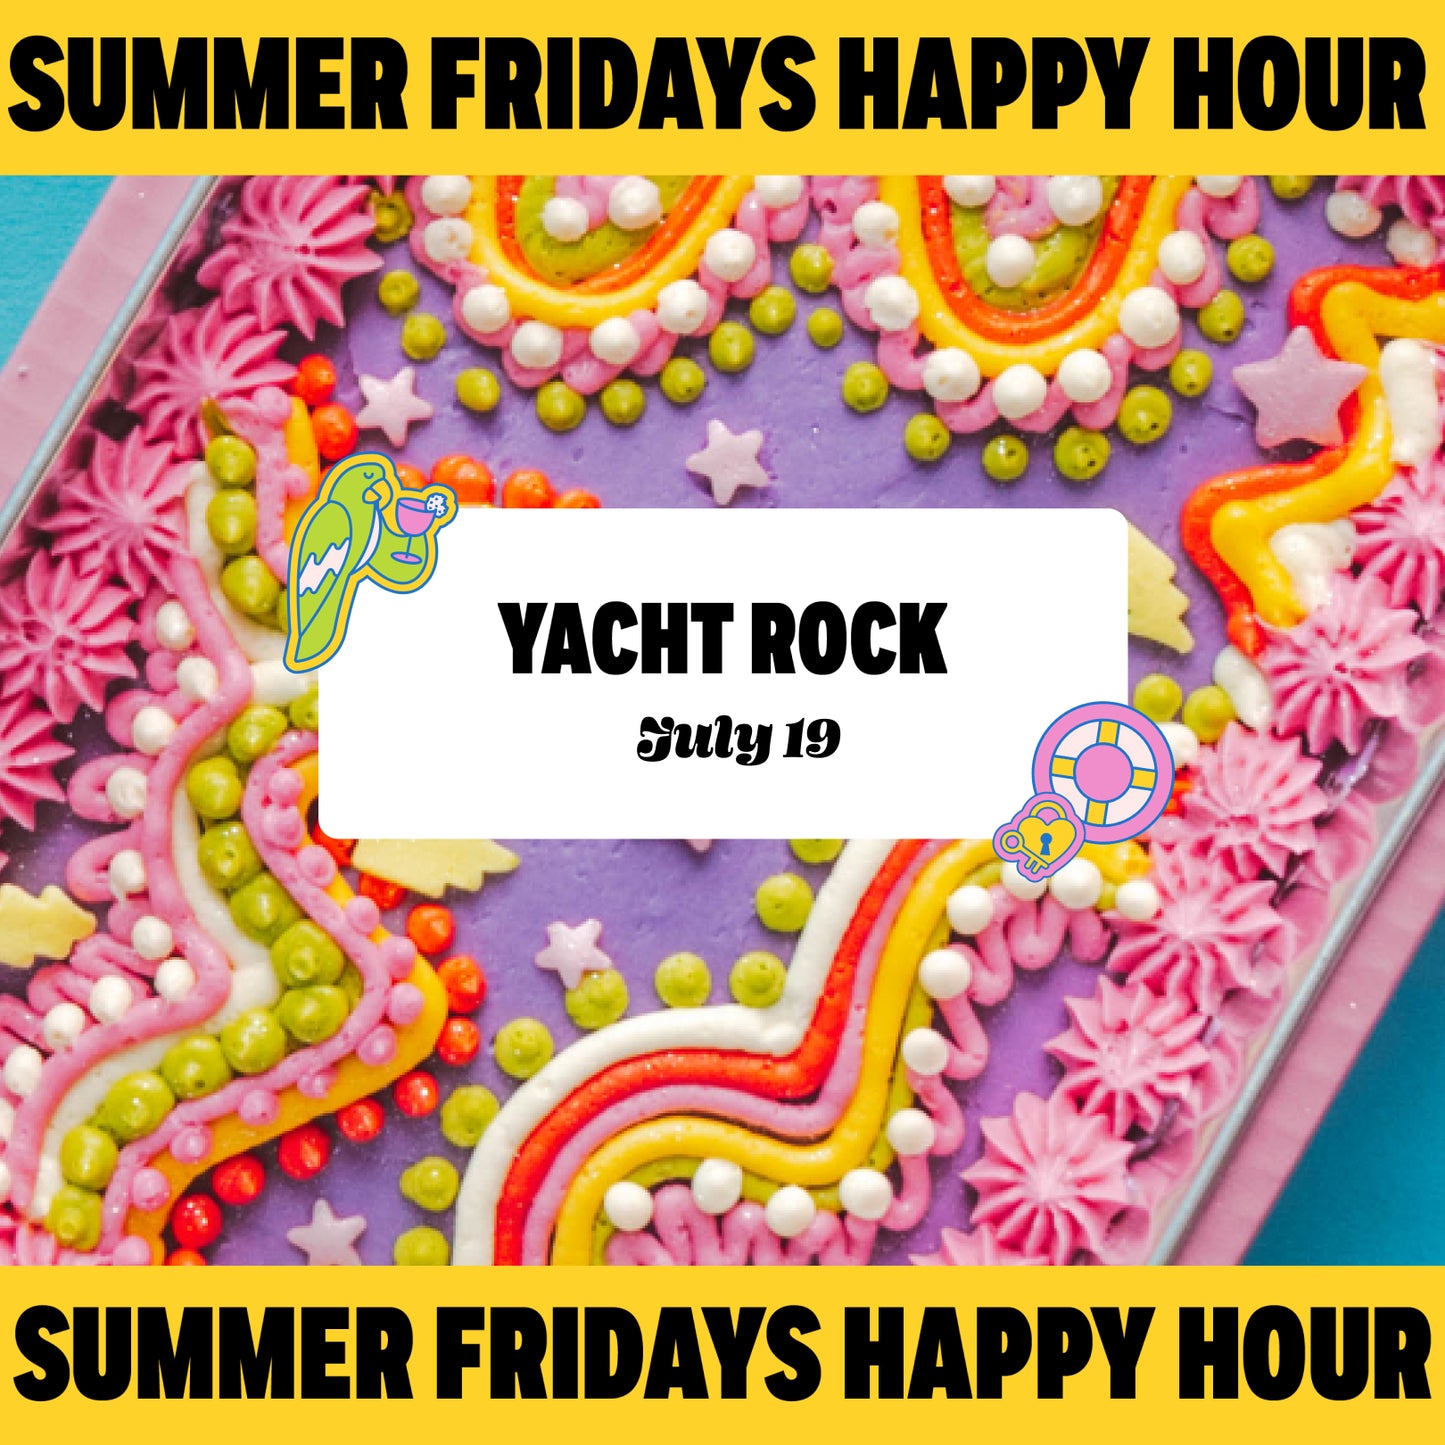 Summer Fridays: Yacht Rock - Friday, July 19